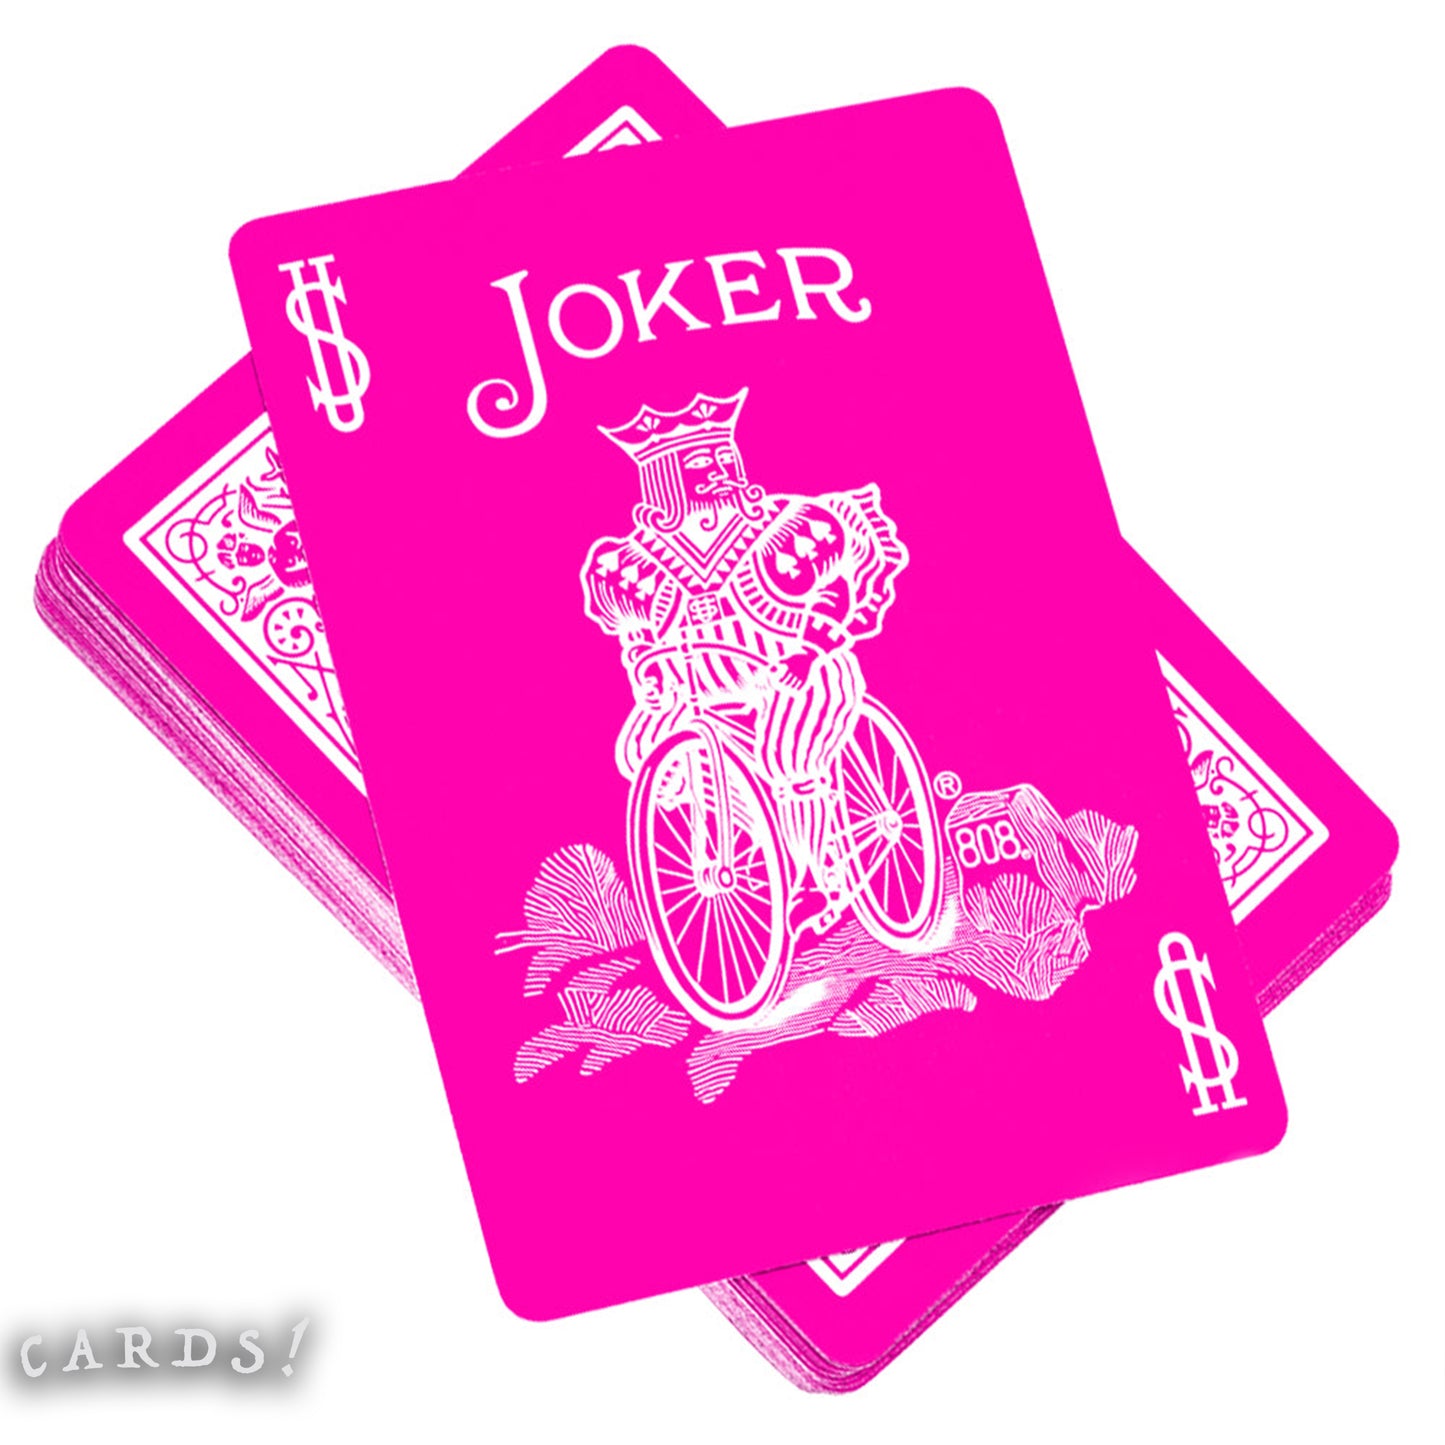 Bicycle® 粉紅色卡 啤牌 撲克牌